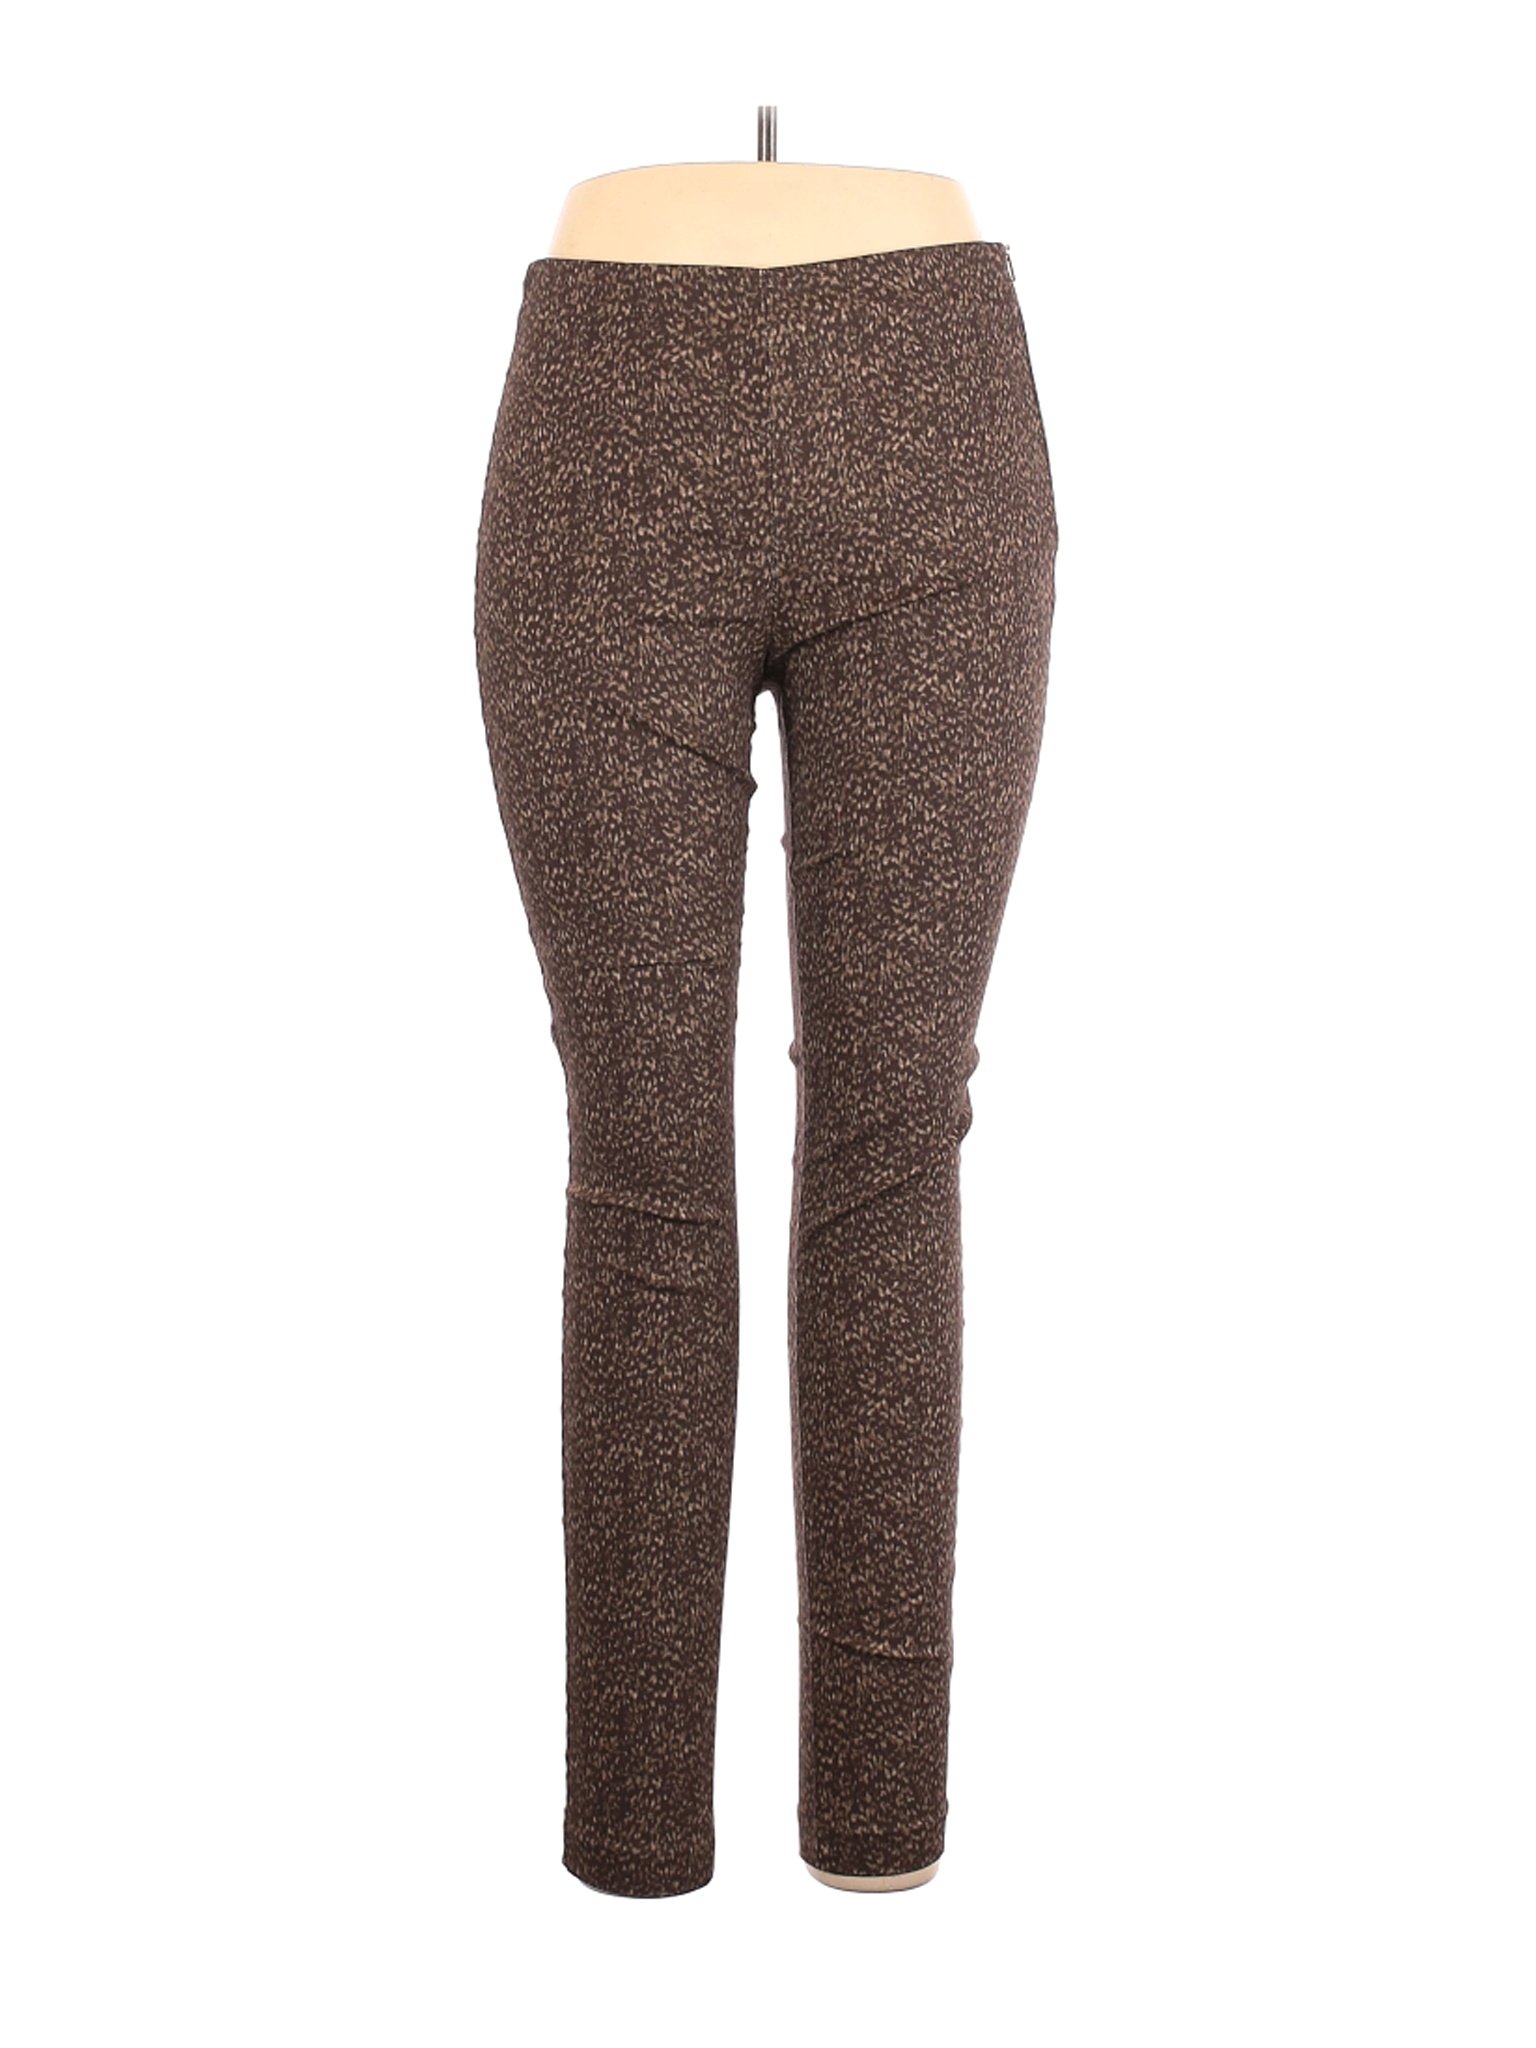 H&M Women Brown Casual Pants 14 | eBay